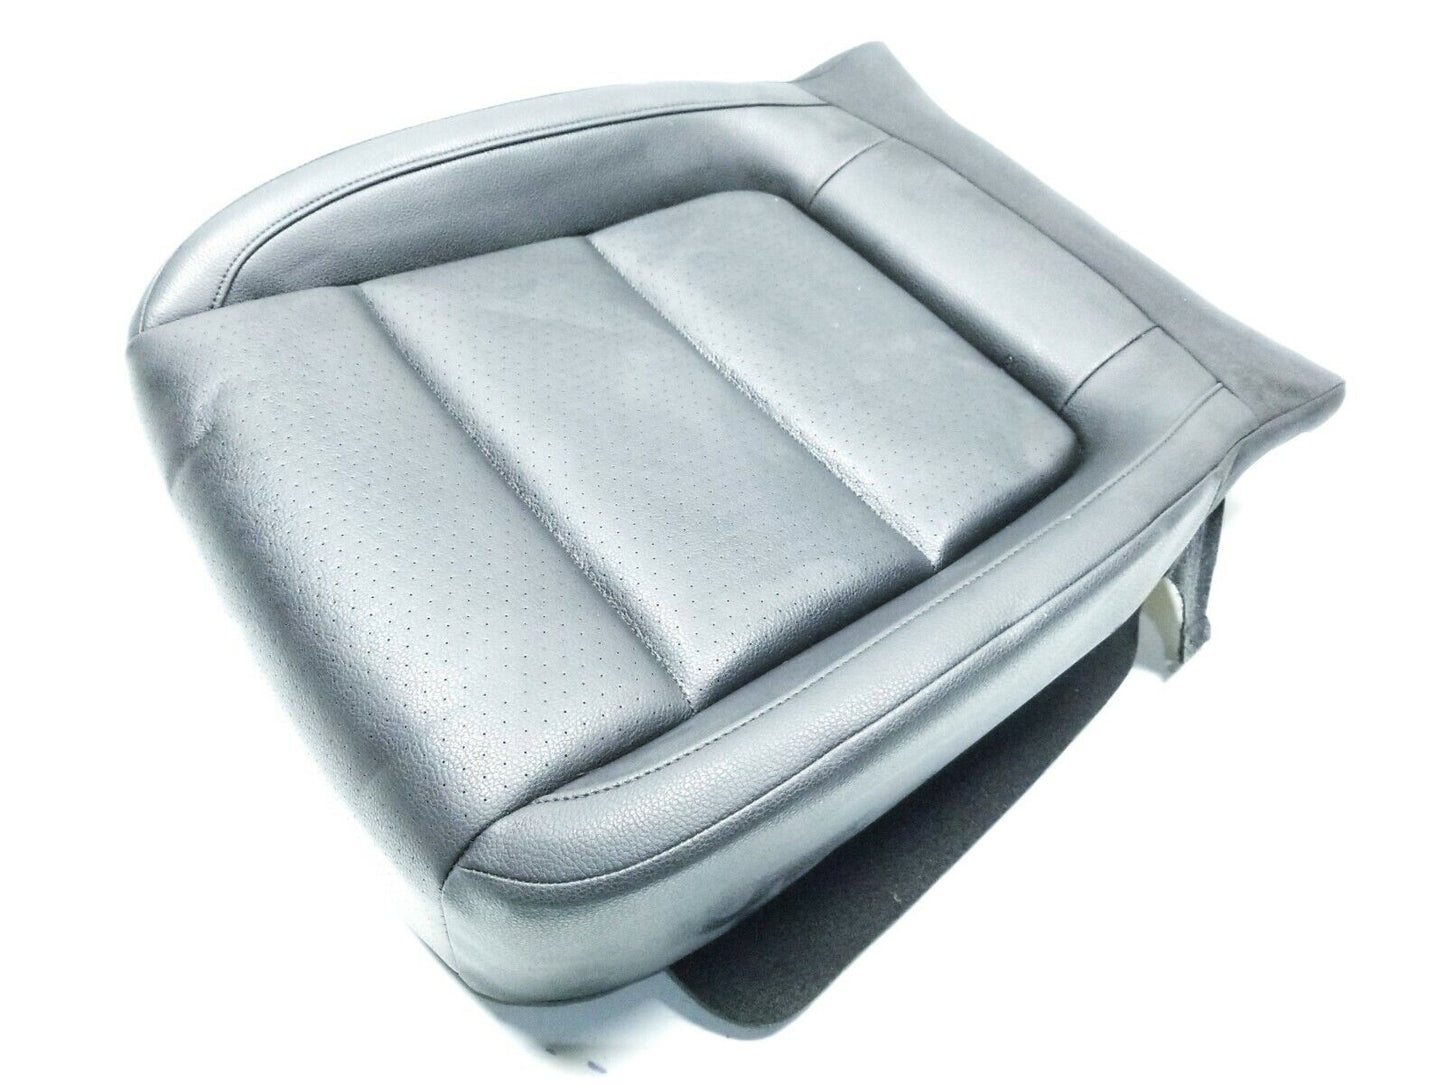 09 11 12 13 14 15 16 17 VW Tiguan Front Passsenger Seat Lower Cushion OEM 43k